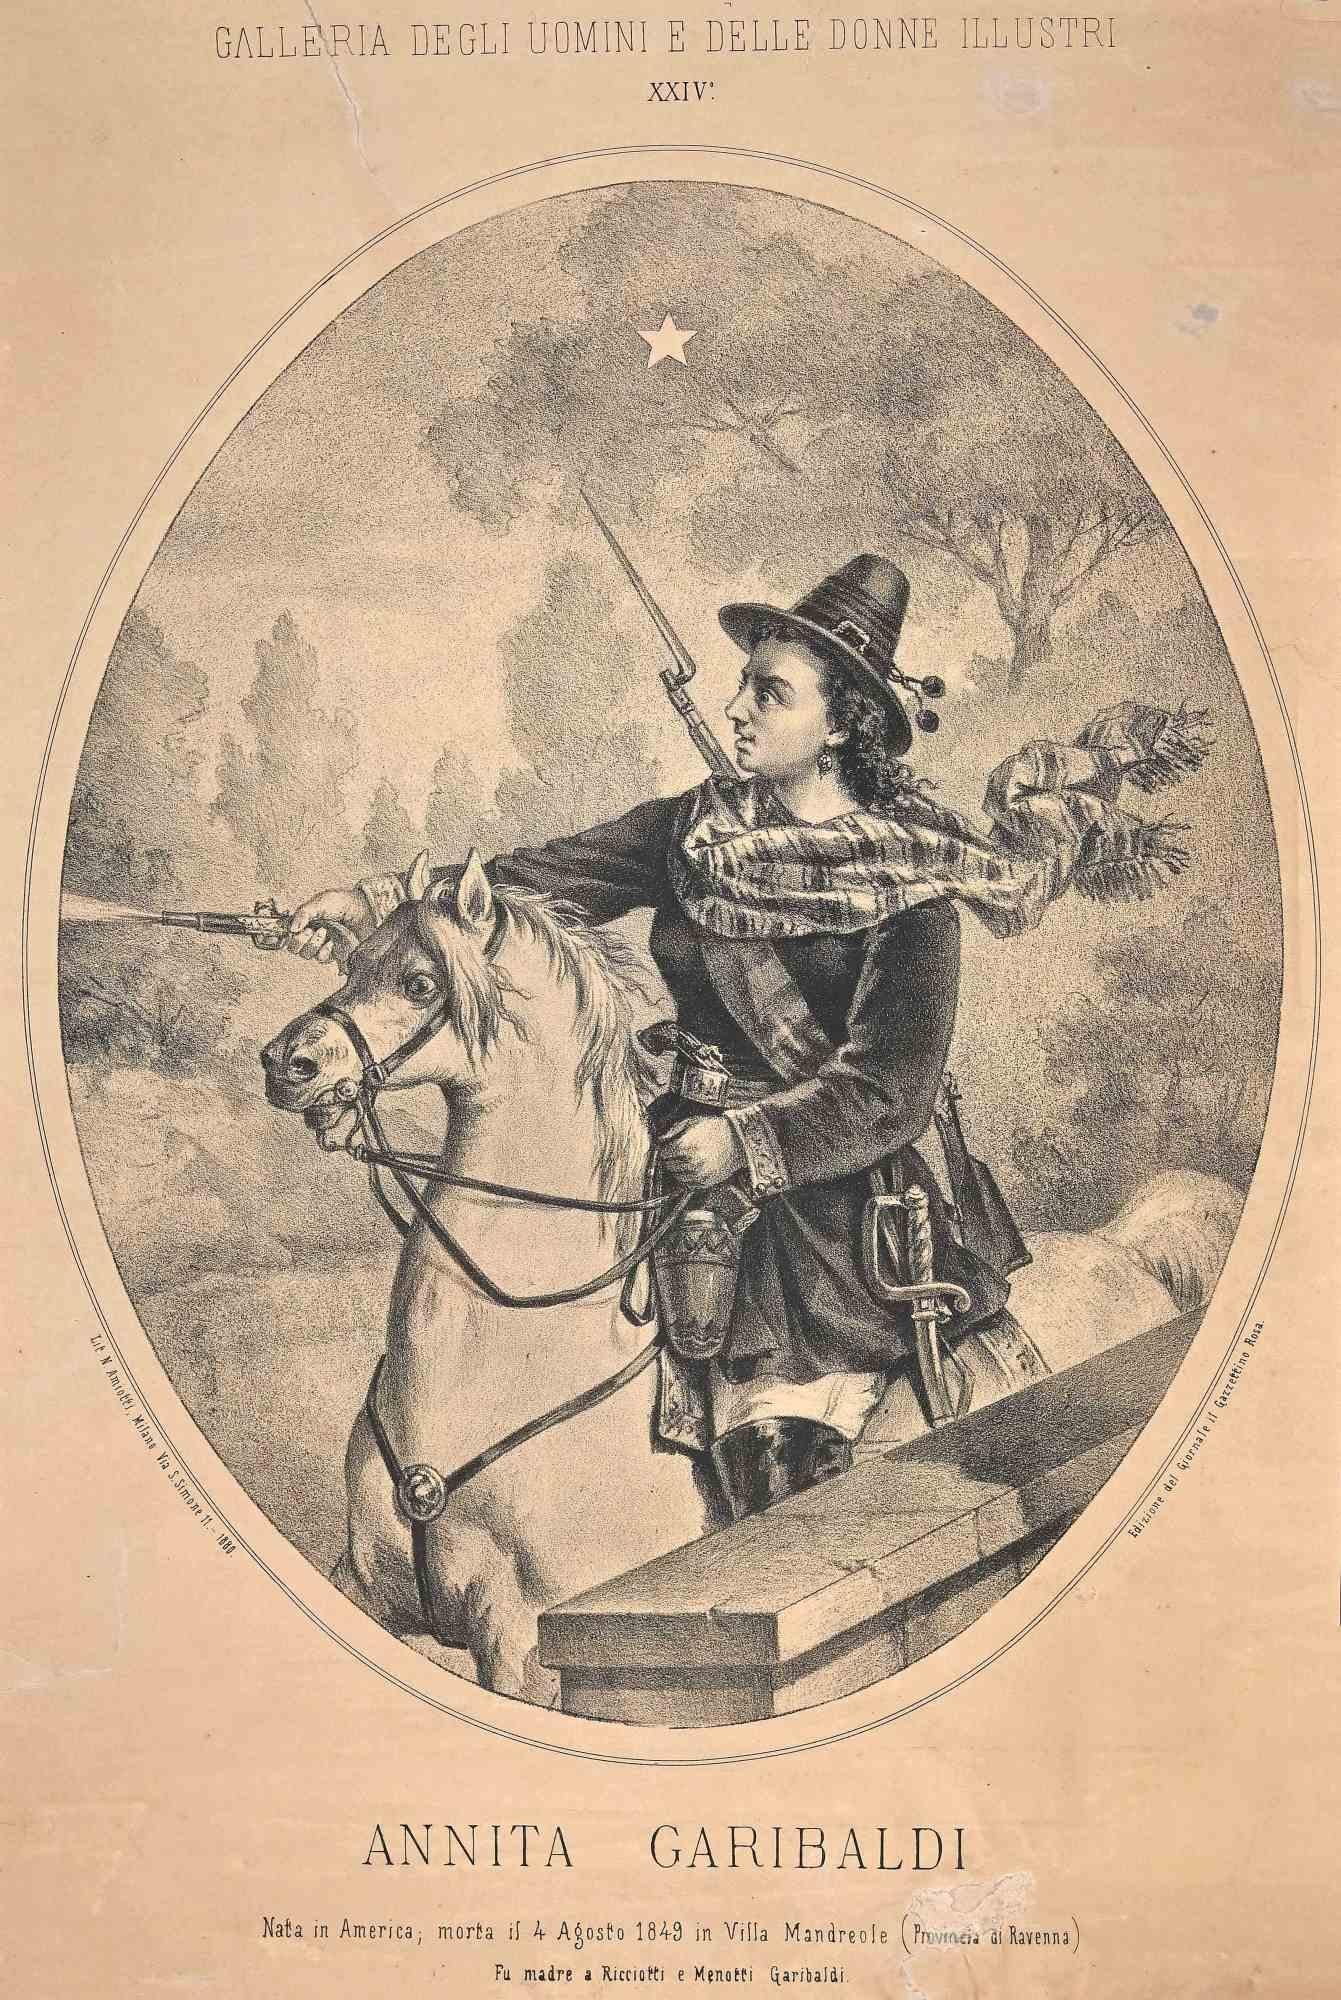 Natale Amiotti Portrait Print - Portrait of Anita Garibaldi Riding a Horse - Lithograph by N.Amiotti-1880